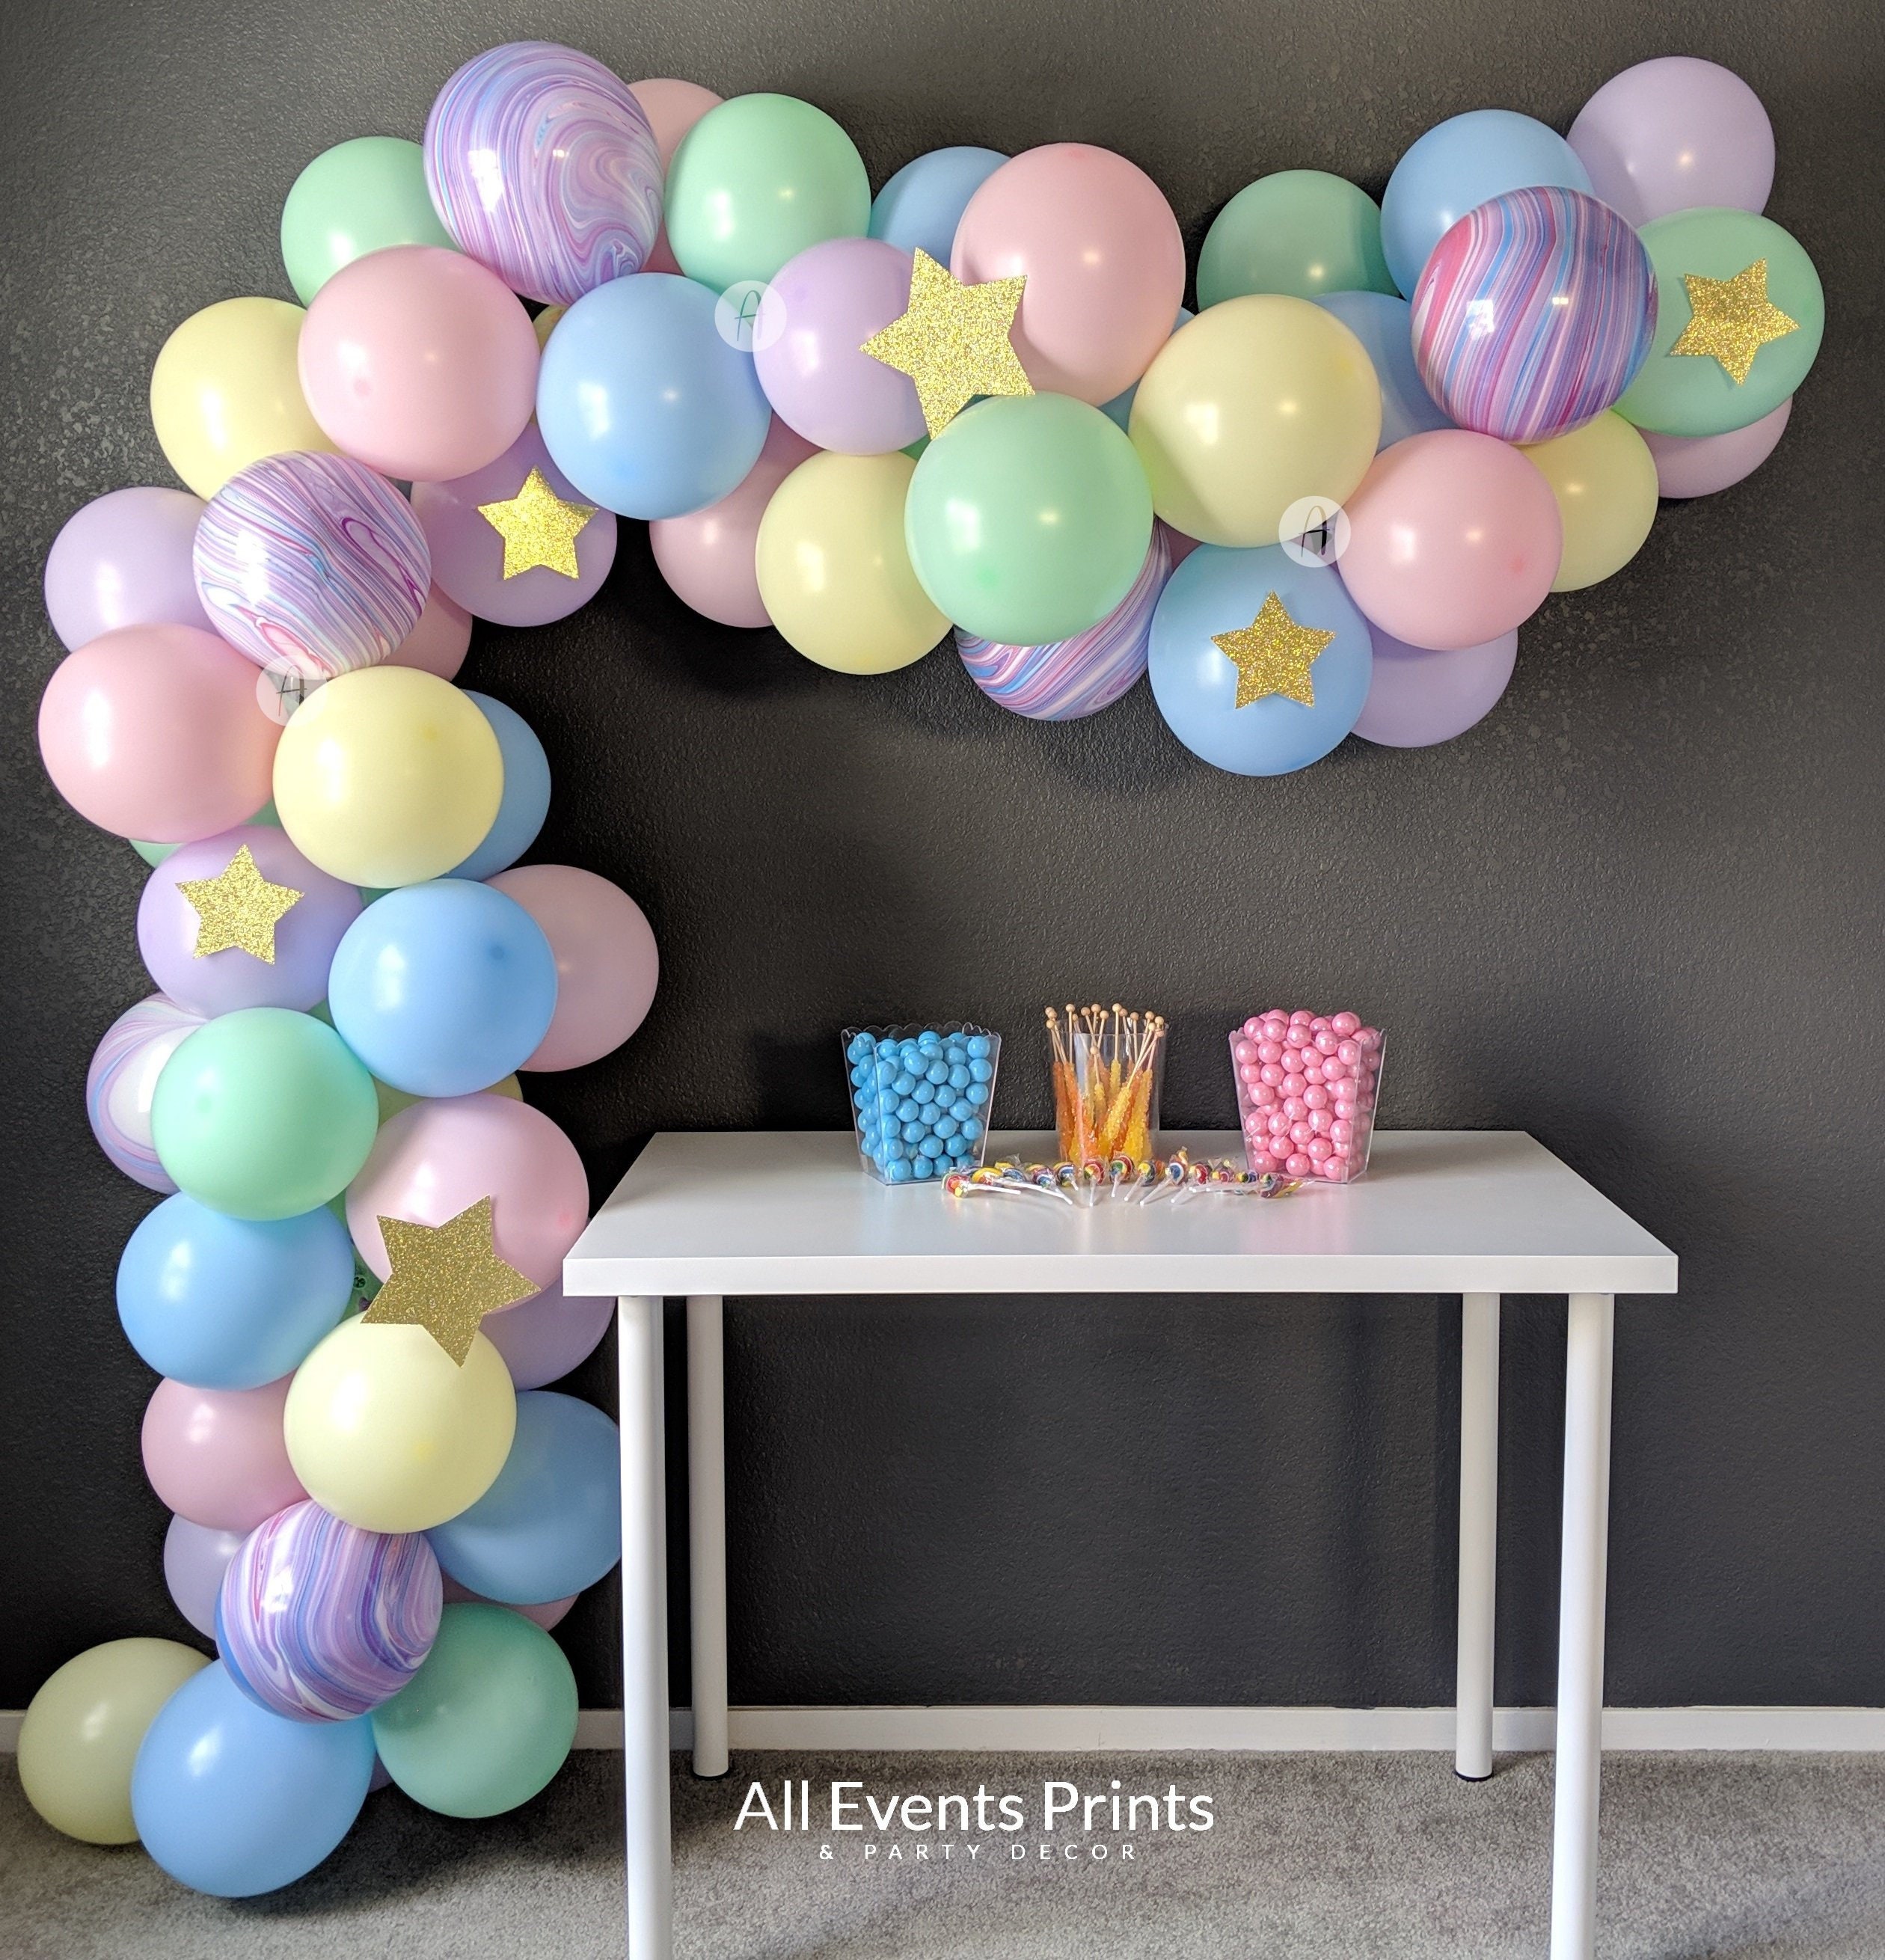 10ft. Pastel Rainbow Balloon Garland Kit by Celebrate It NIP